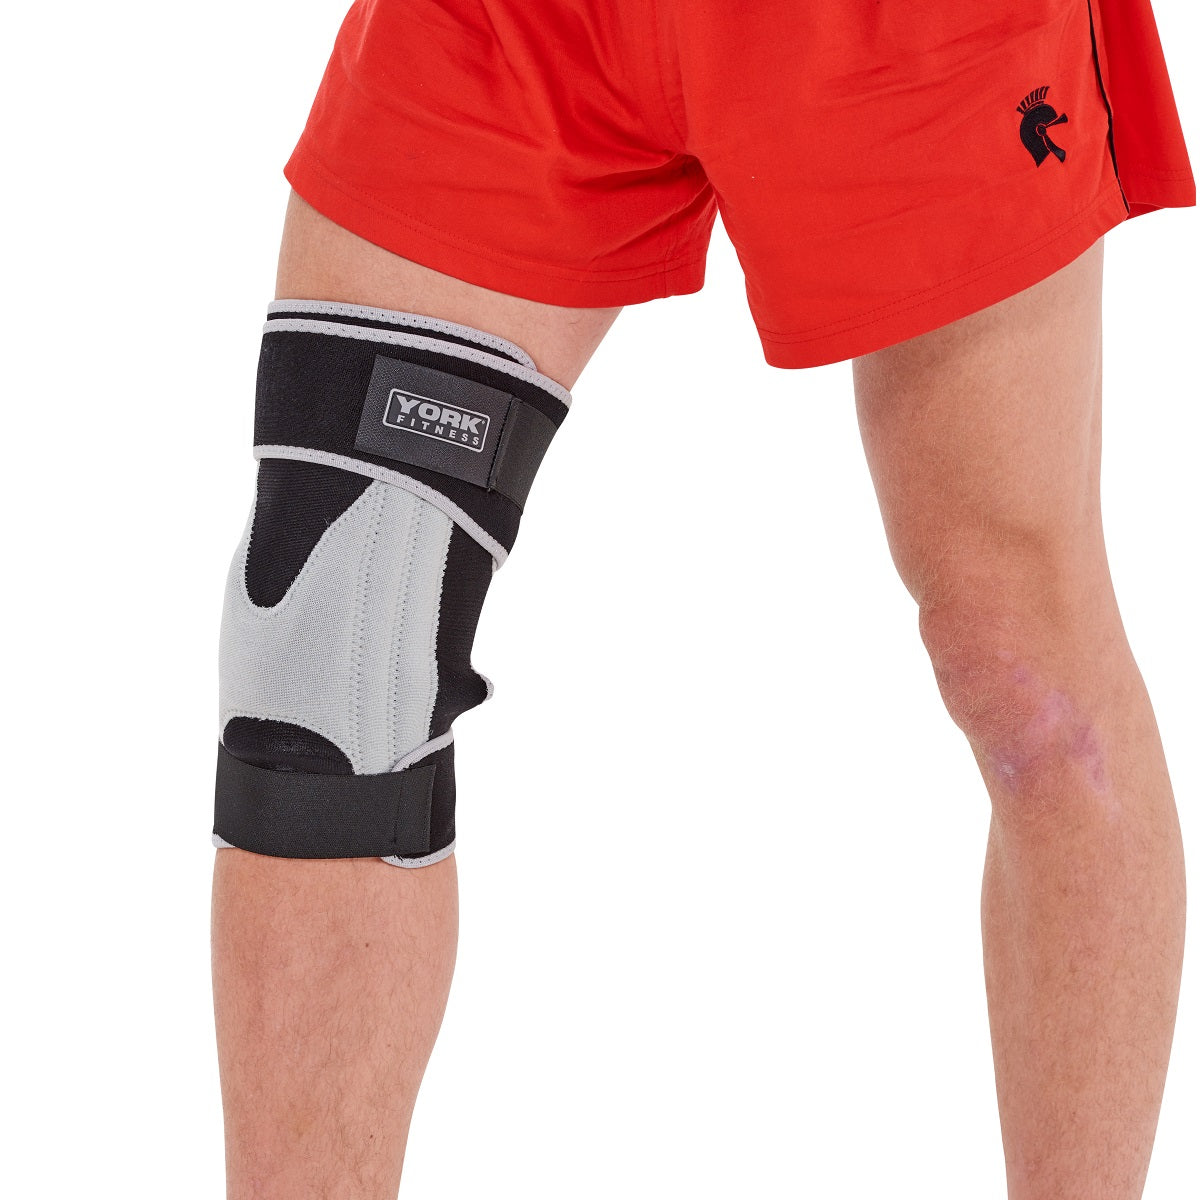 York Fitness Adjustable Knee Support